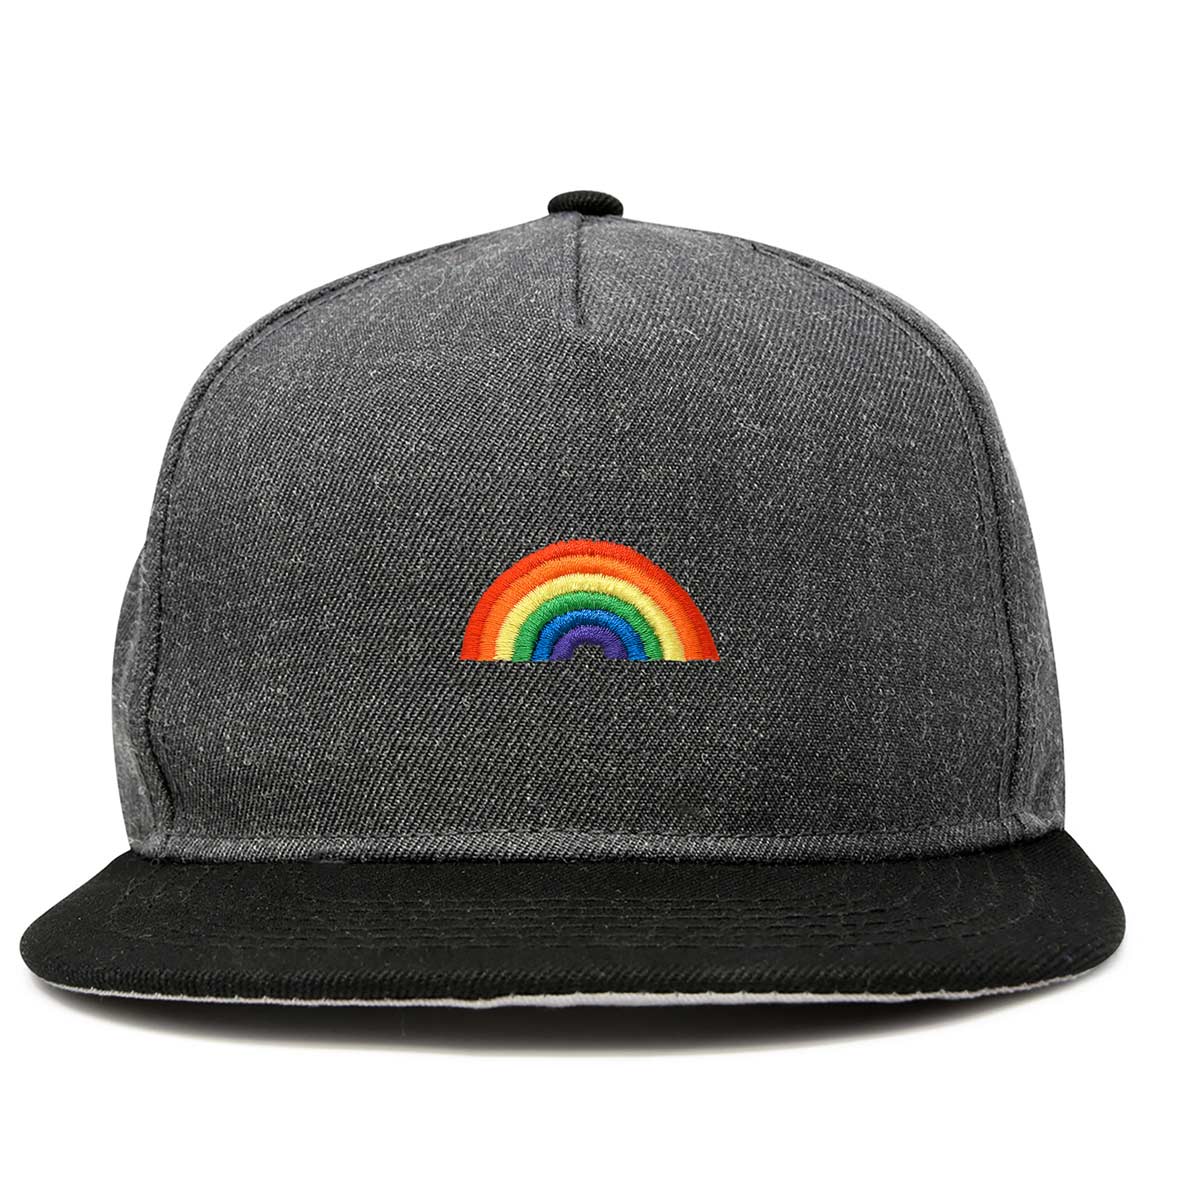 Dalix Rainbow Snapback Flat Bill Baseball Hat Embroidered Cap Mens in Black